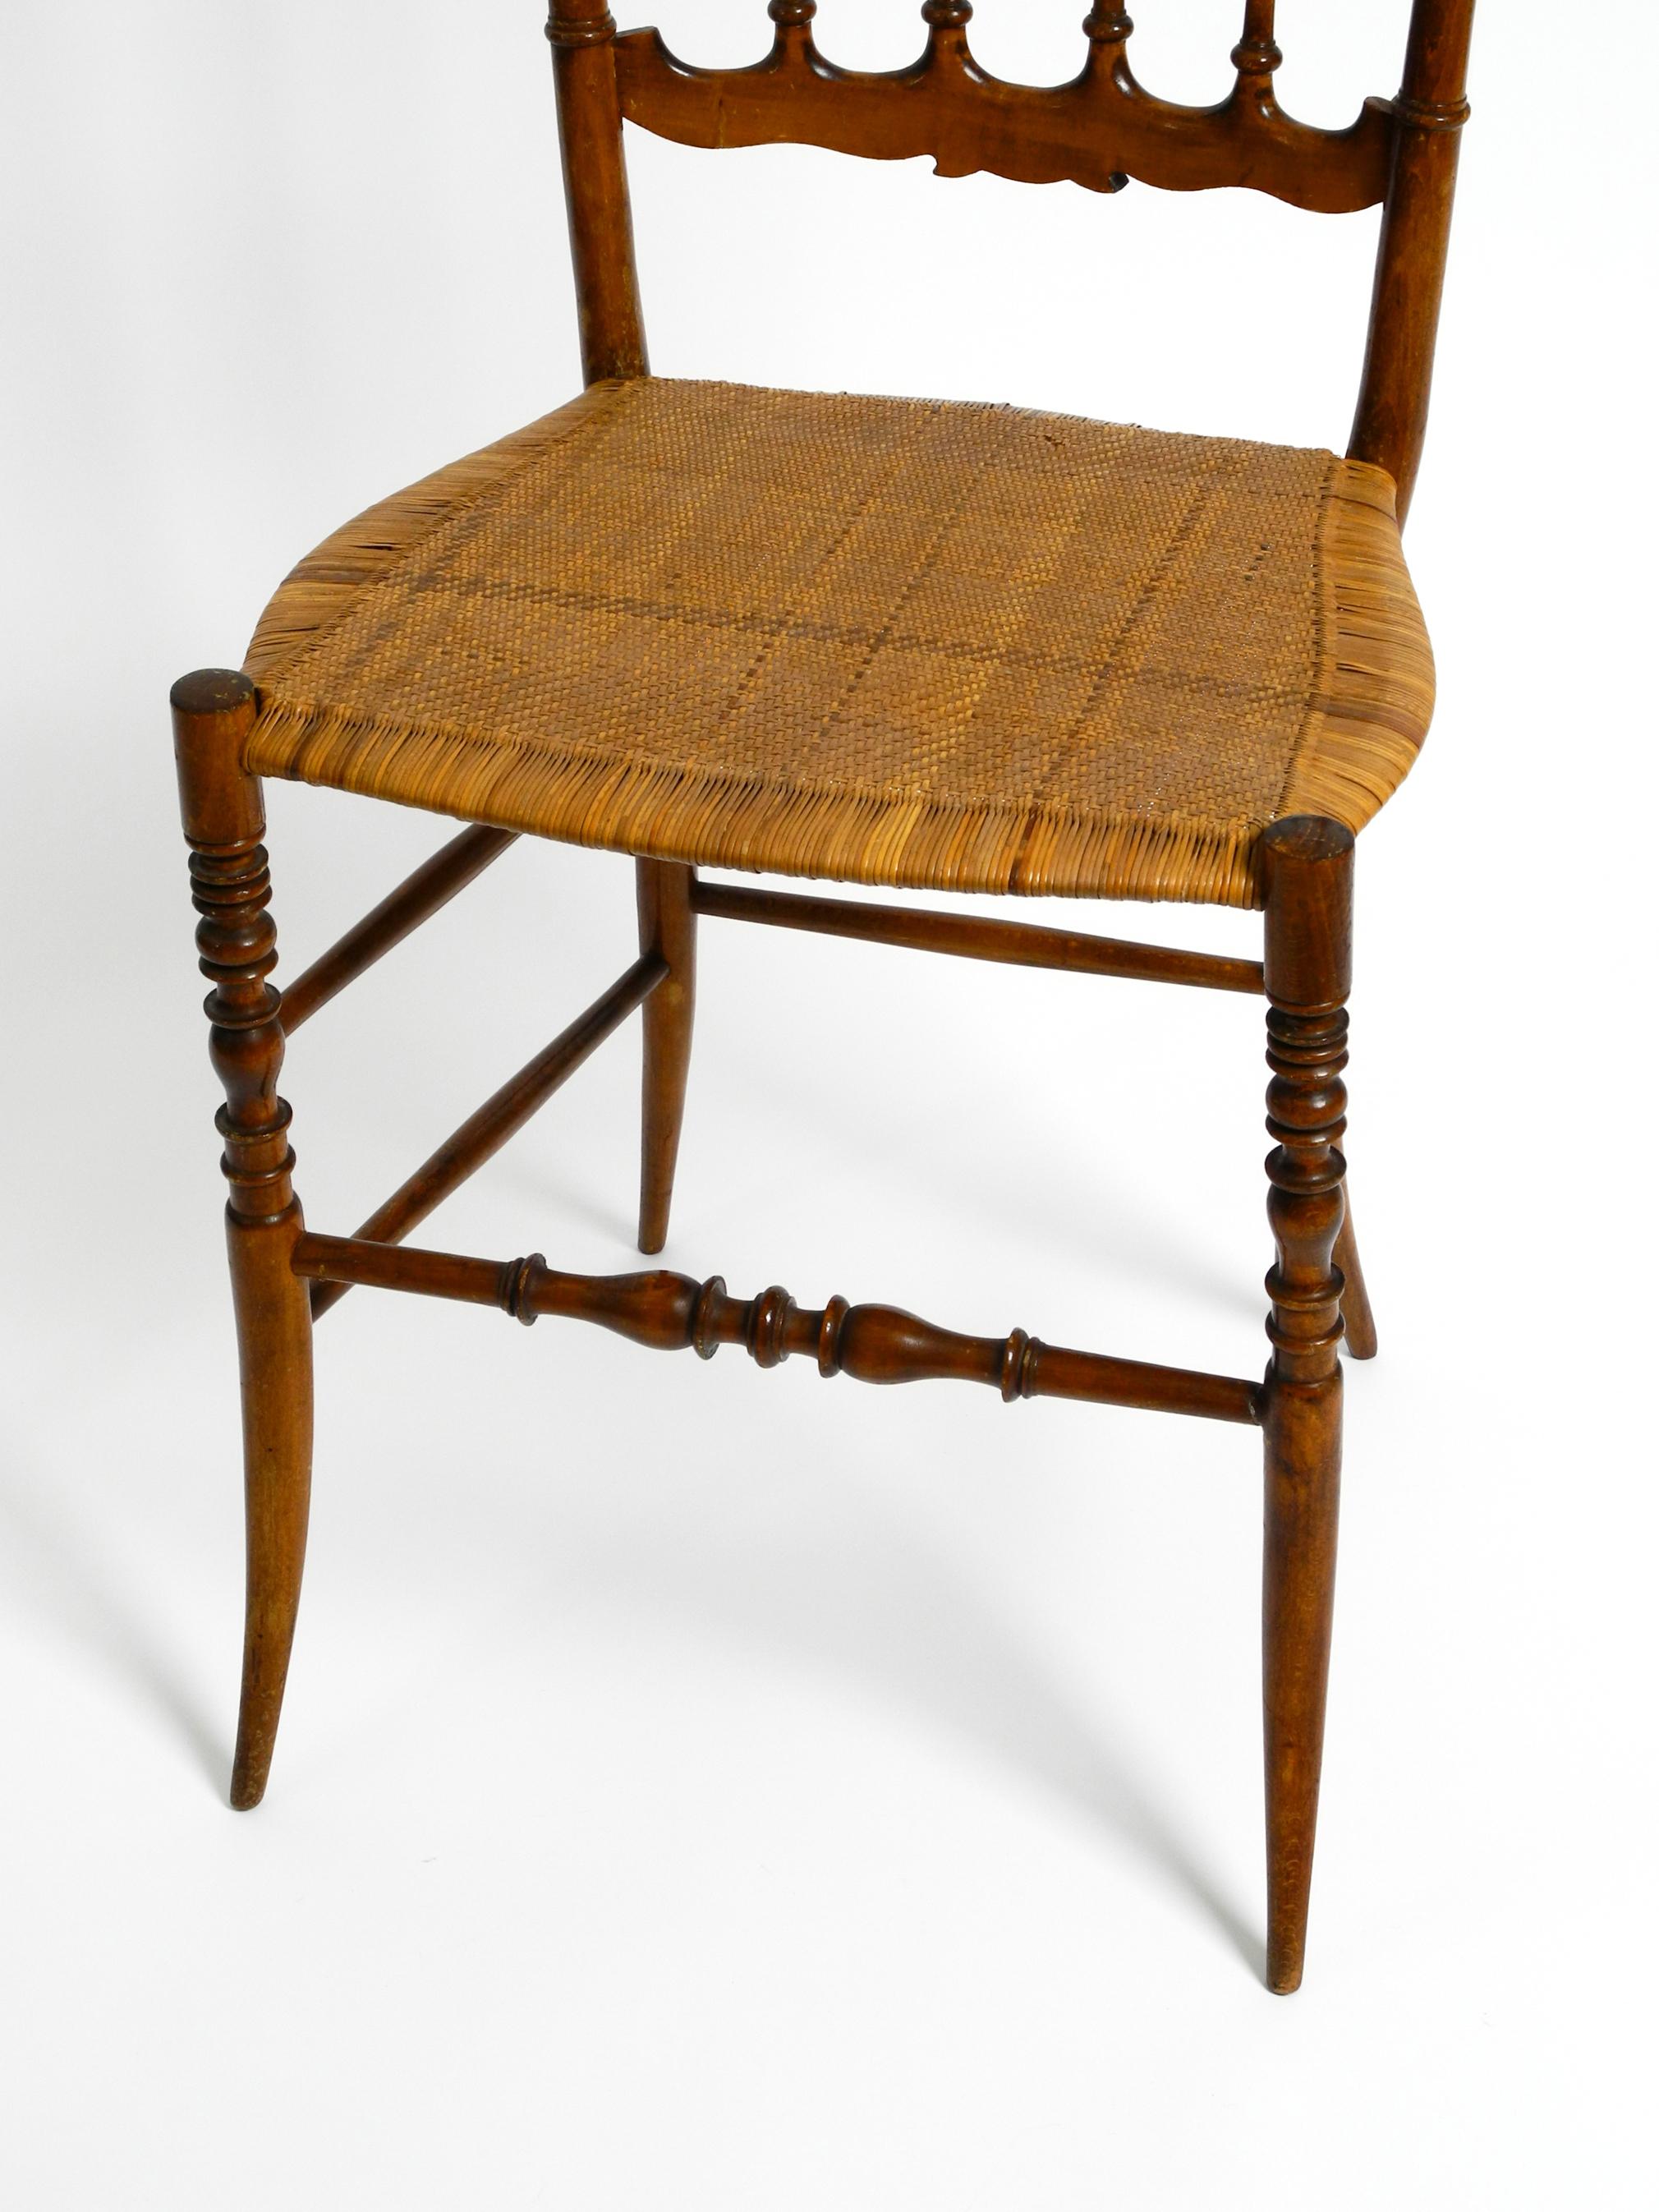 Italian 1950s Walnut Chiavari Chair Designed by Giuseppe Gaetano Descalzi